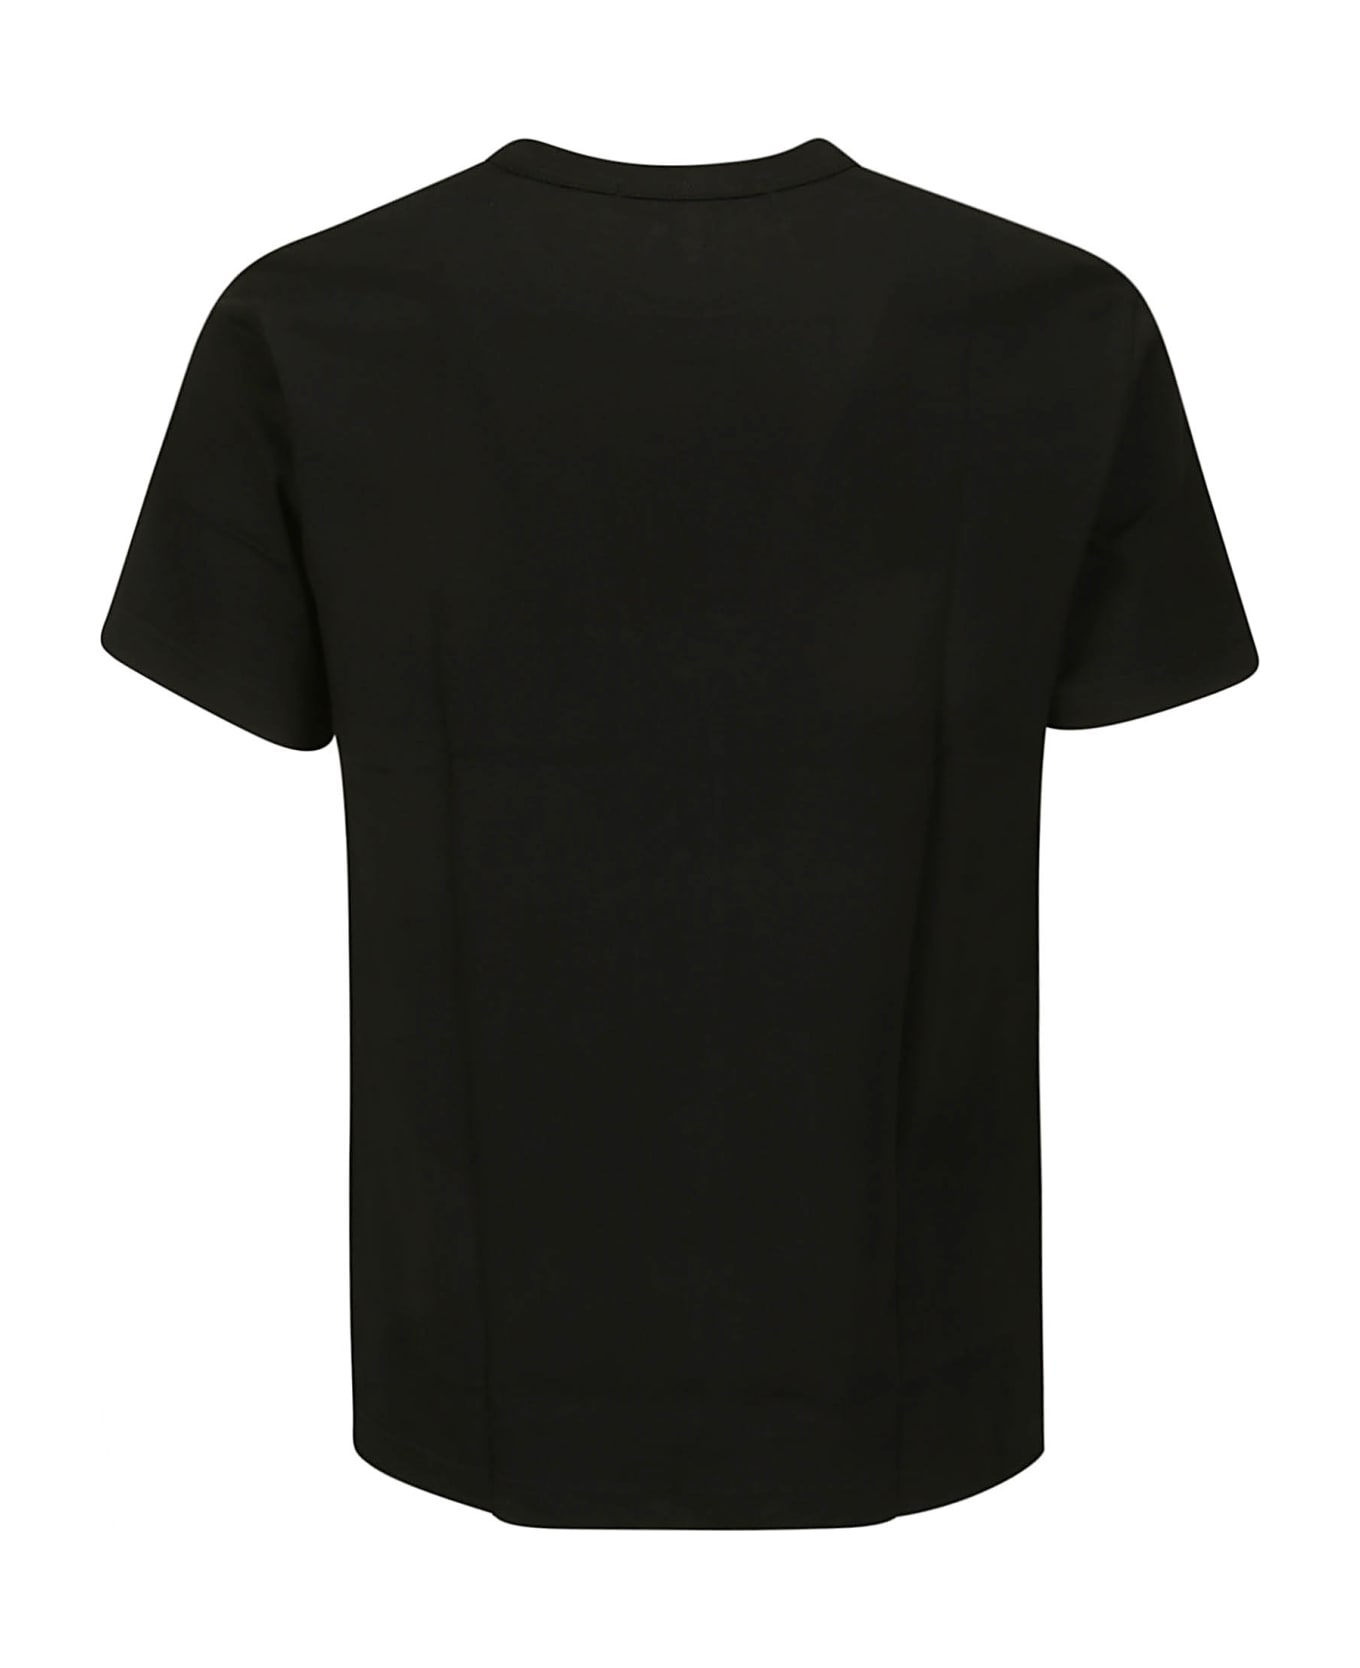 Comme des Garçons Shirt Cotton Jersey Plain With Printed Cdg Shirt L - BLACK